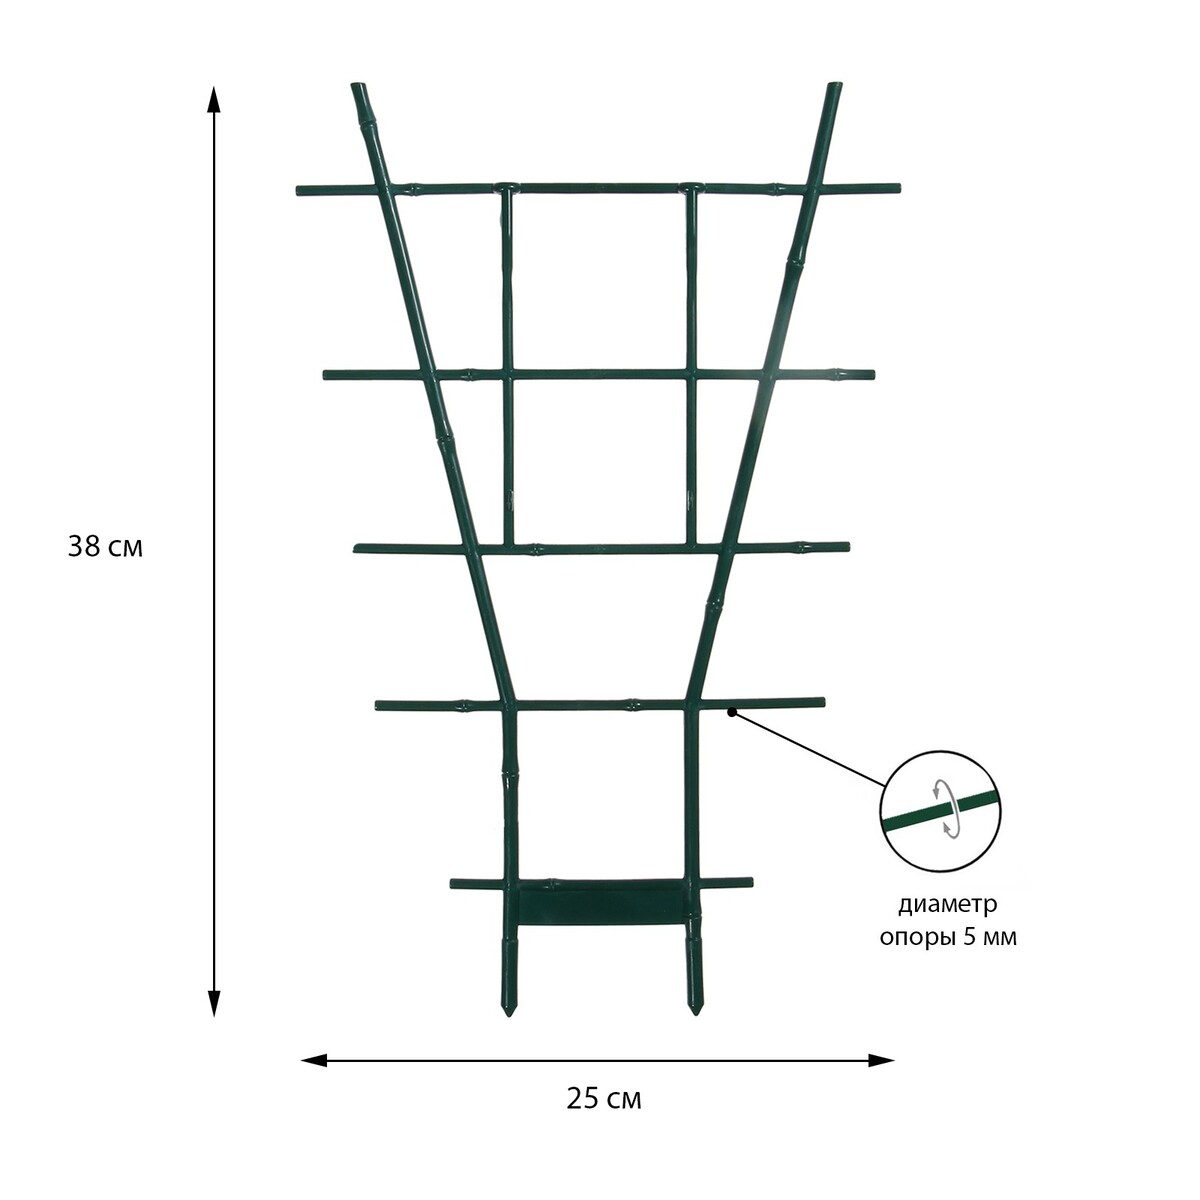 Шпалера, 38 × 25 × 0.5 см, пластик, зеленая, greengo подставка для столовых приборов пластик 11х18х17 см зеленая mv19040